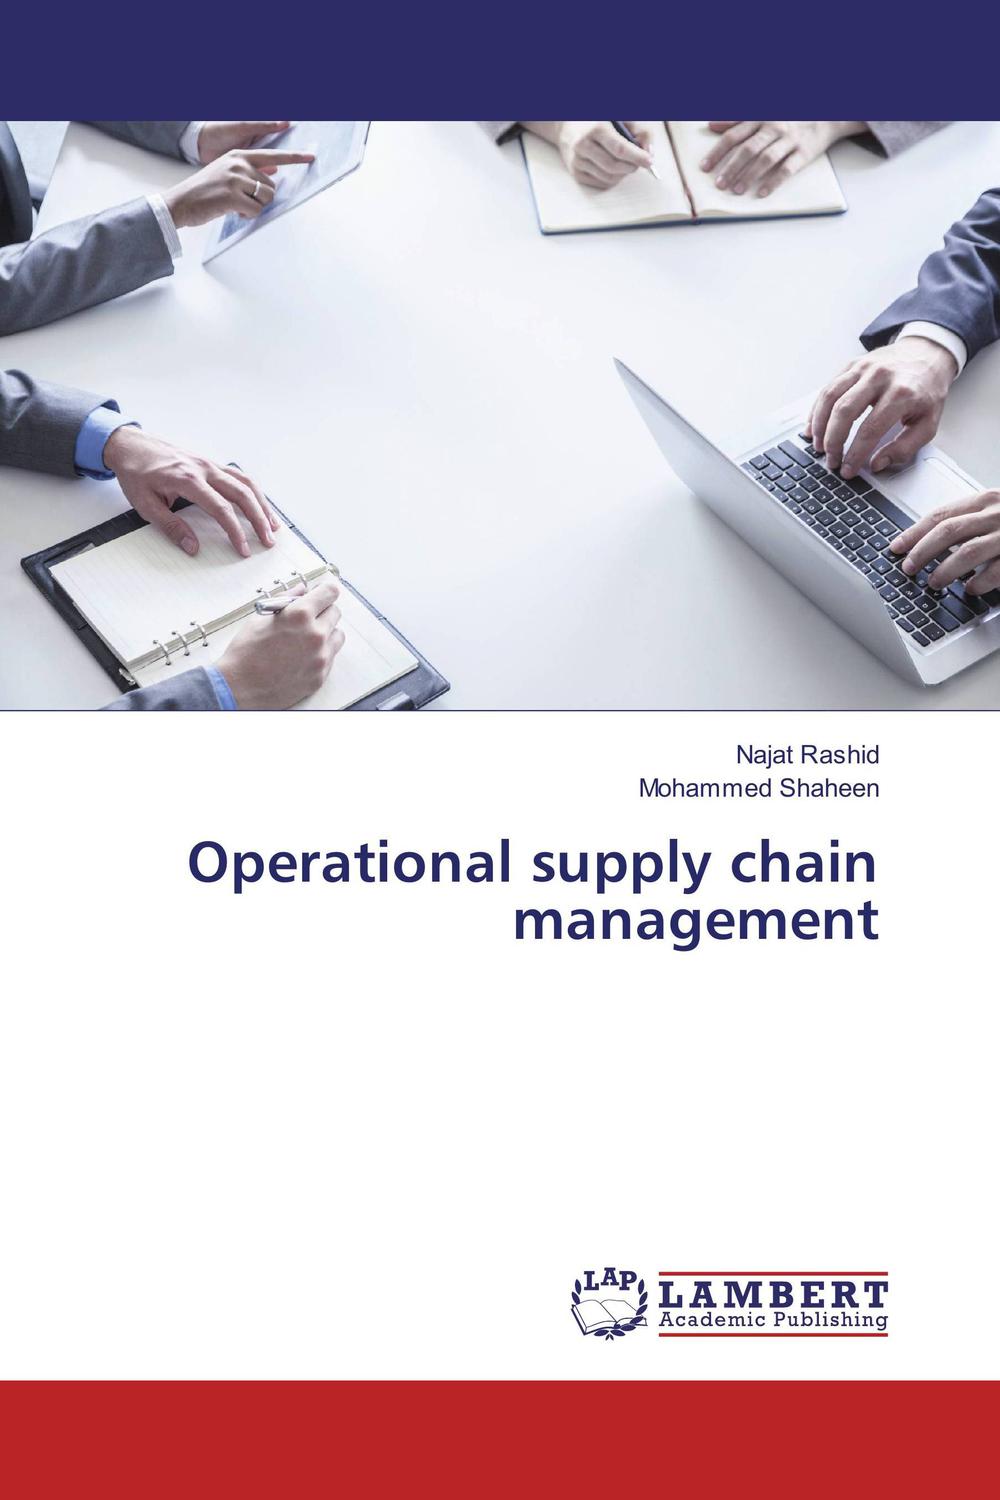 operational supply chain management 1st edition najat rashid , mohammed shaheen 6202055480, 9786202055482